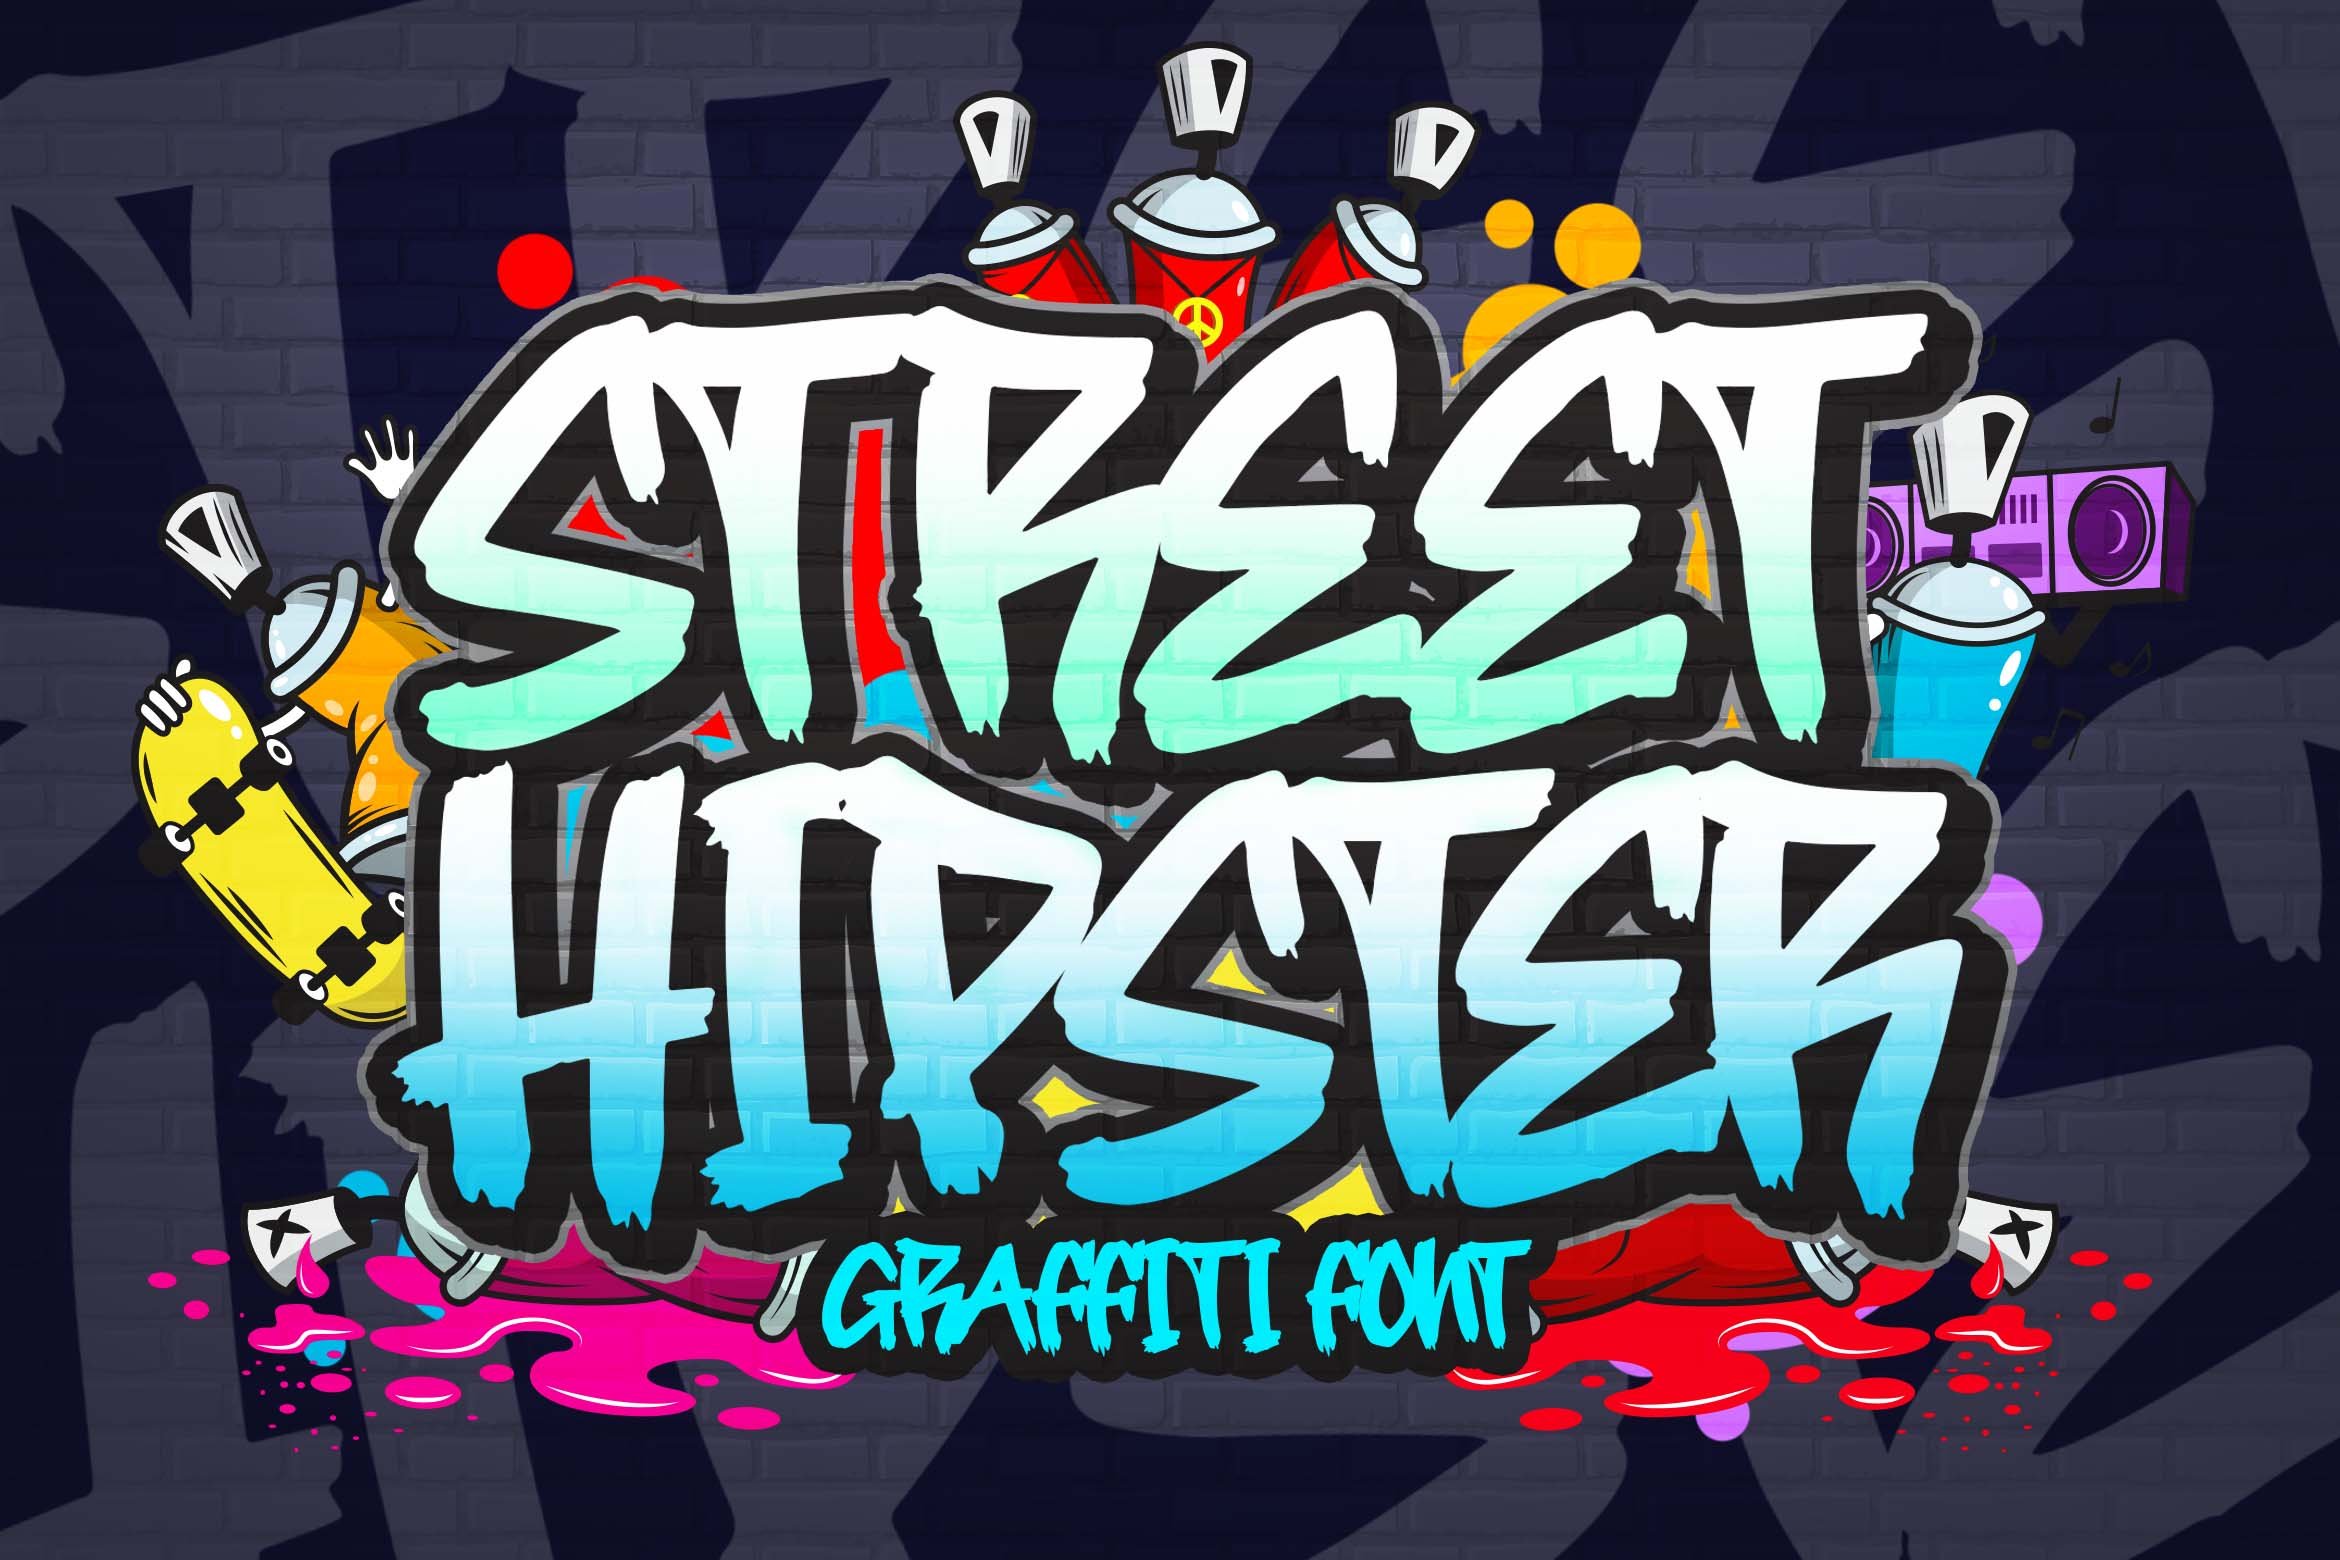 Street Hipster Graffiti Font cover image.